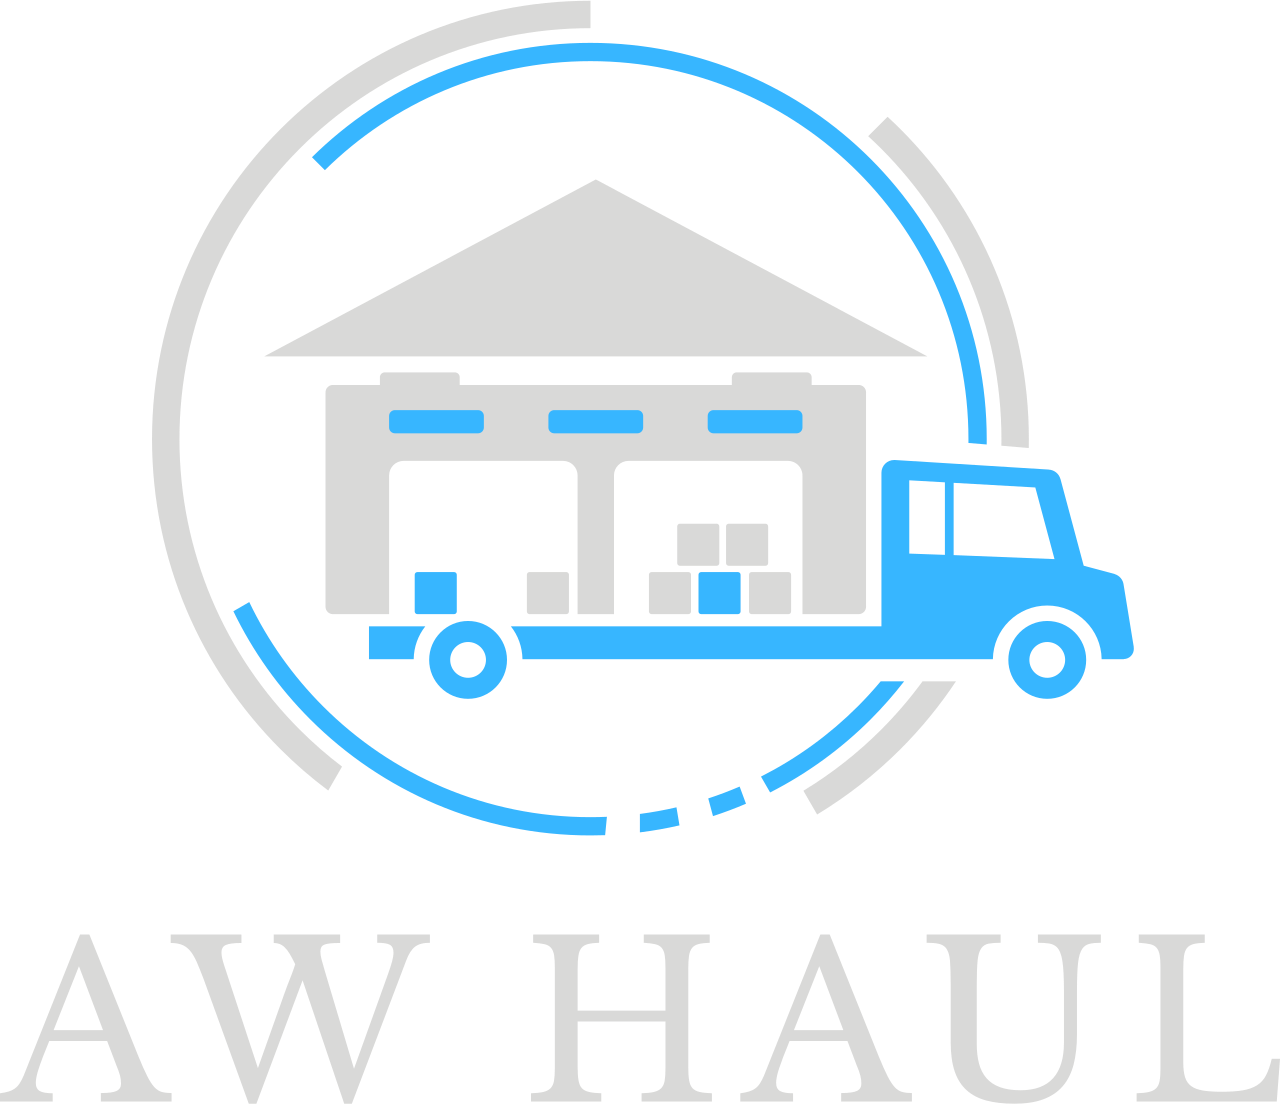 AW Haul LLC's web page